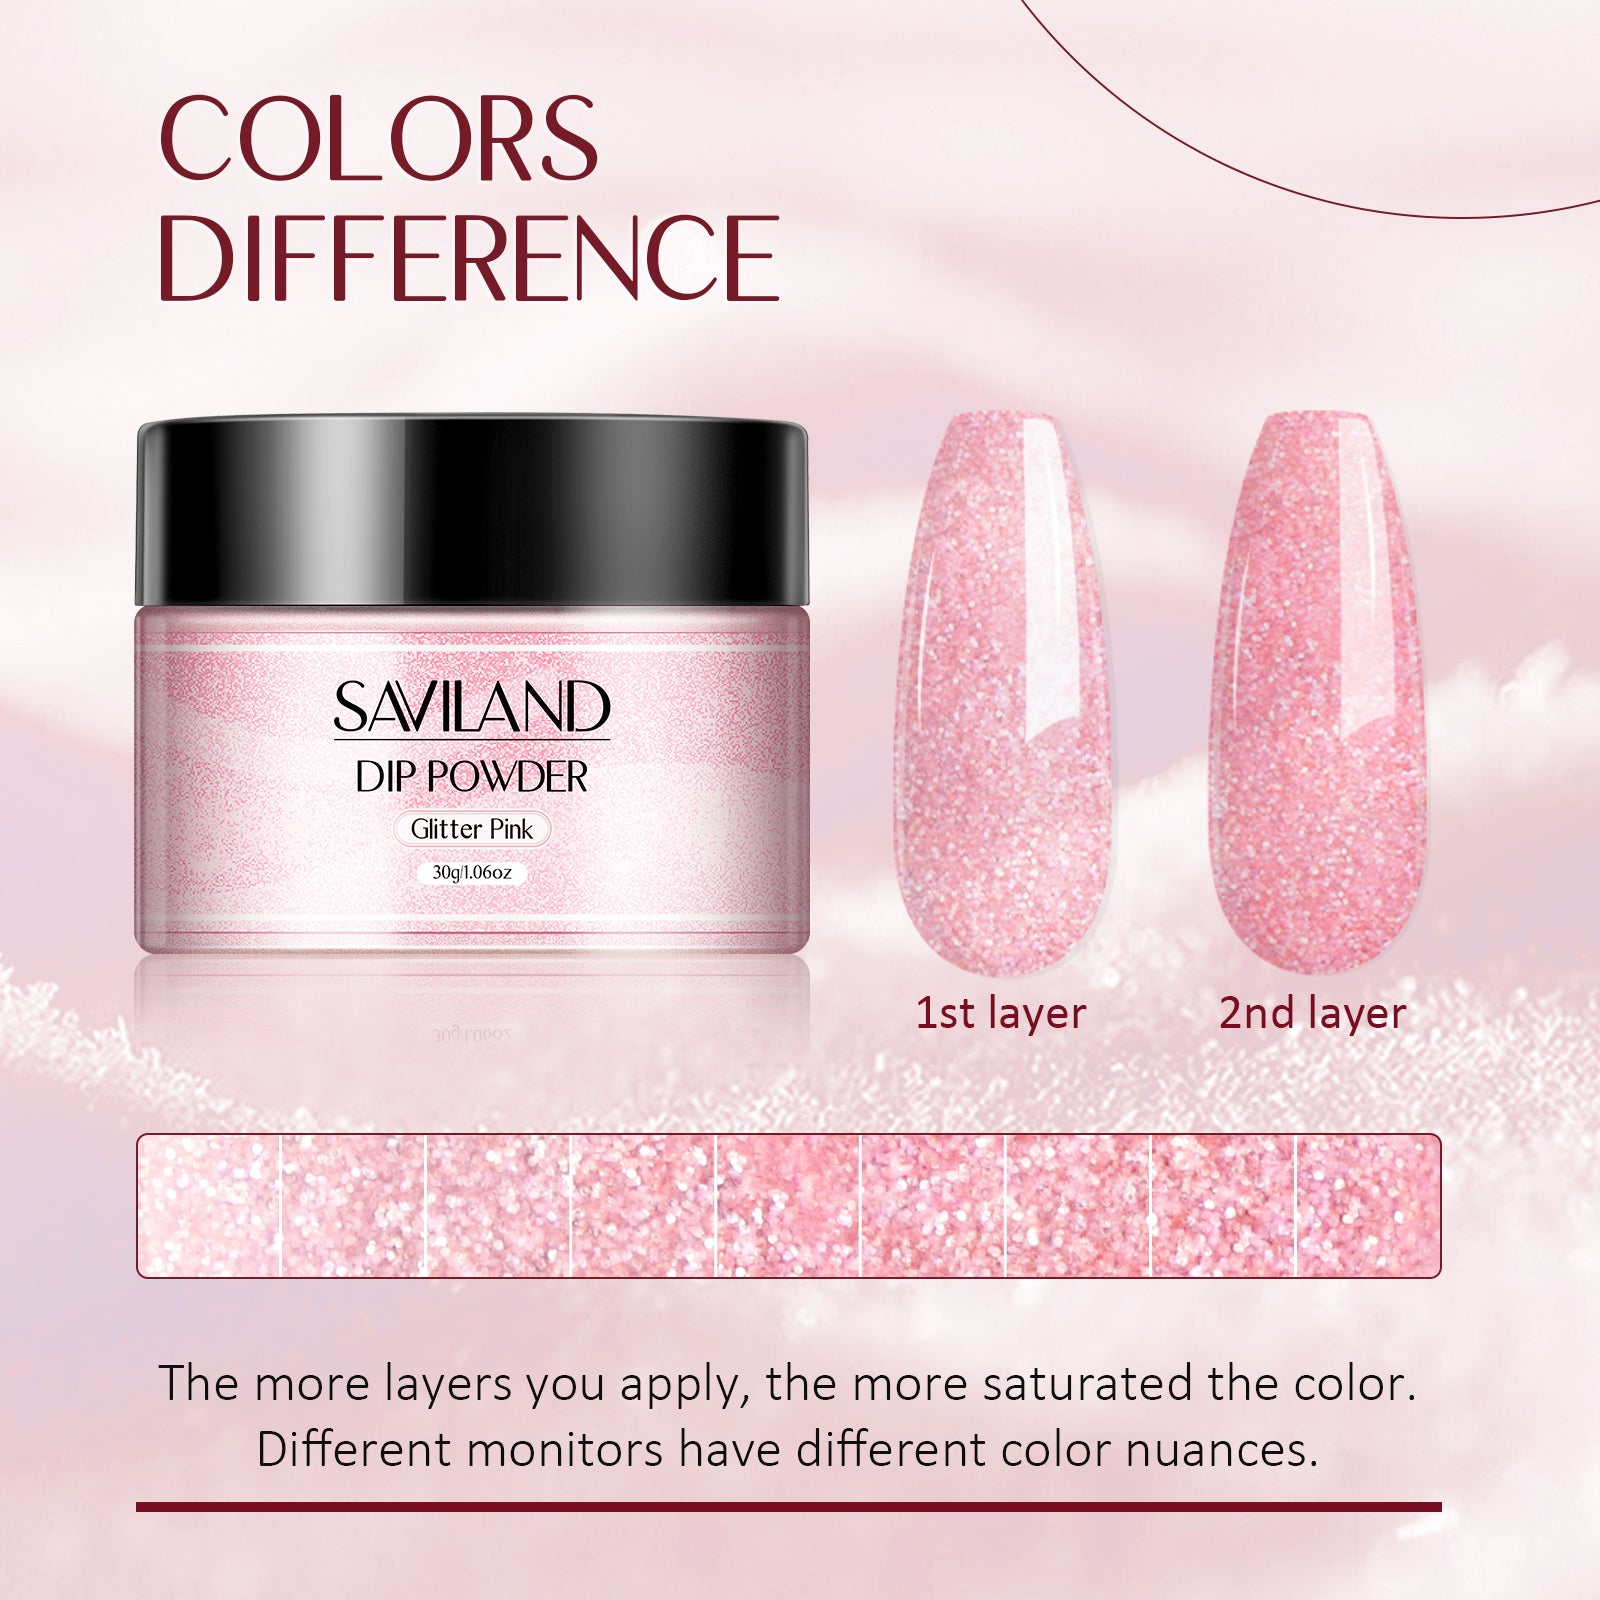 [US ONLY]Glitter Pink Dip Powder - 1.06Oz